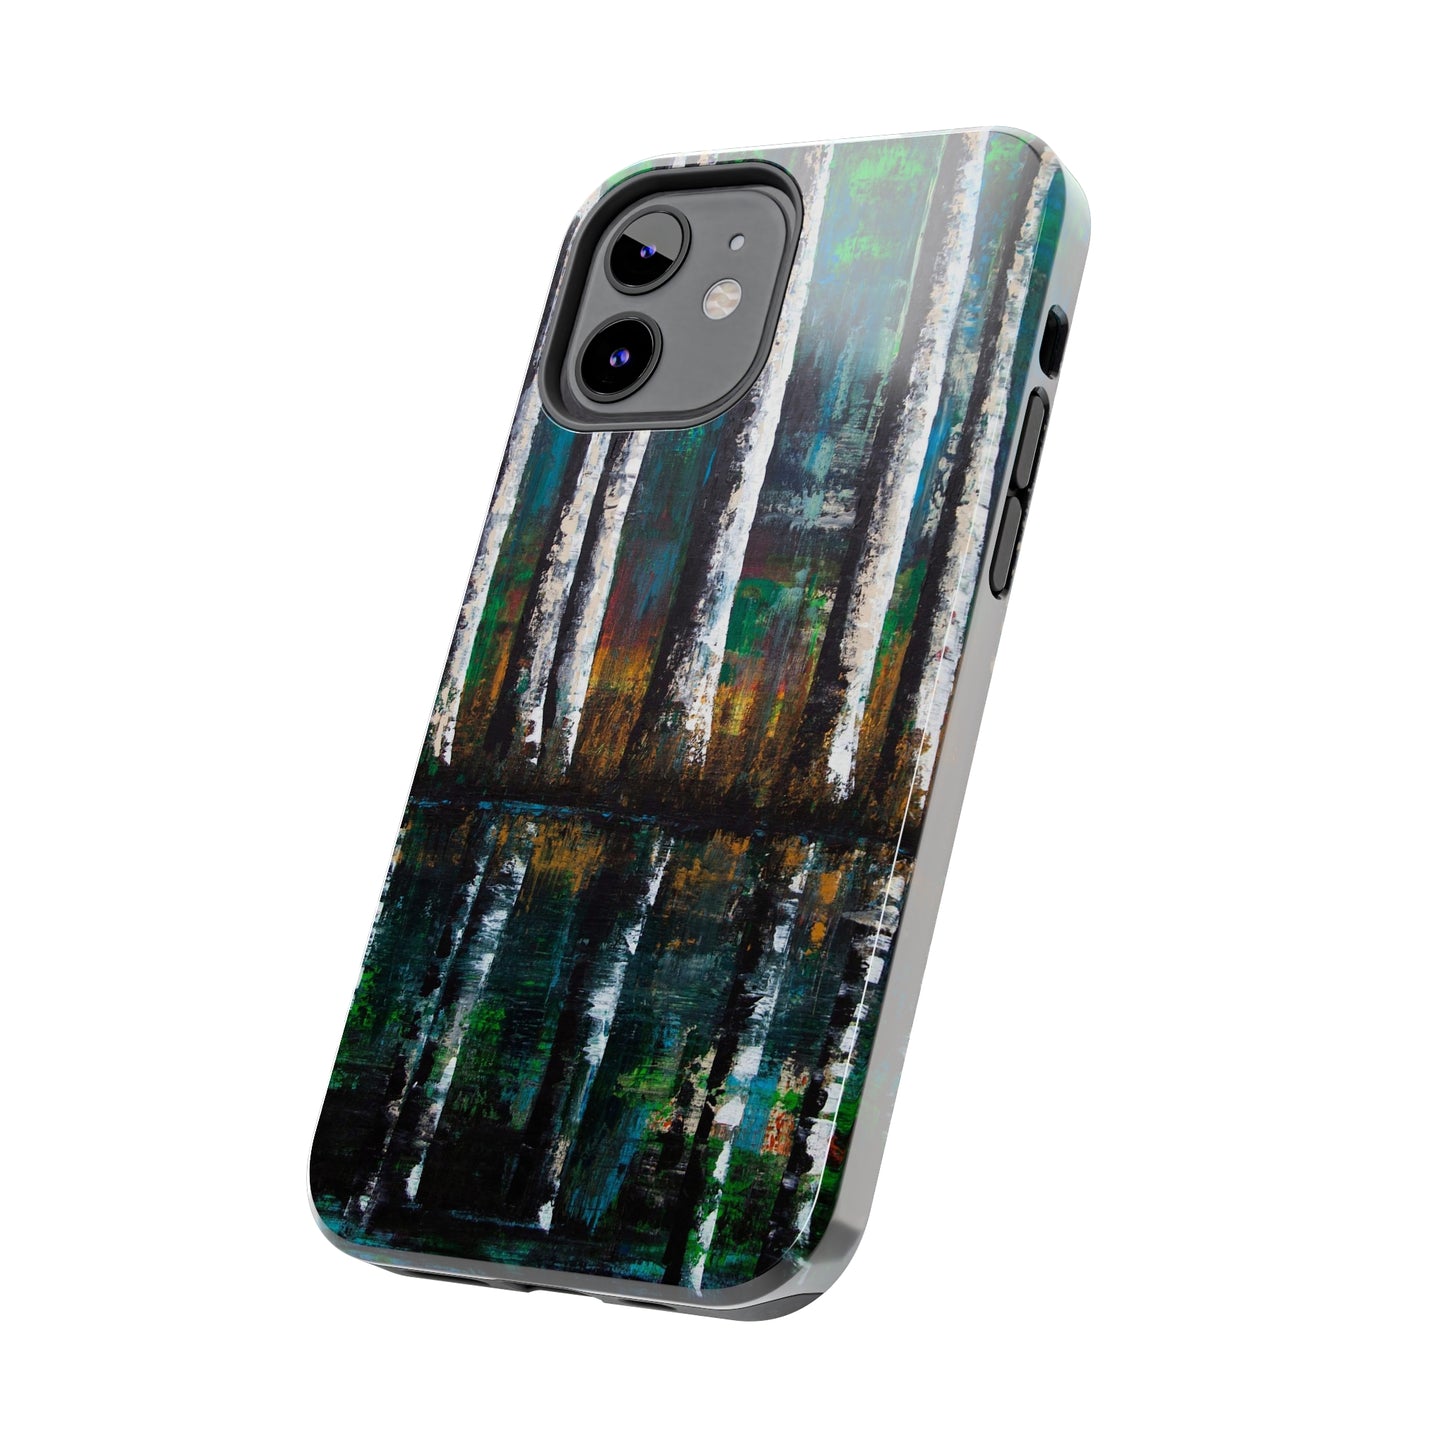 Tough Phone Case - Original art phone case - Slim phone Case - Reflections